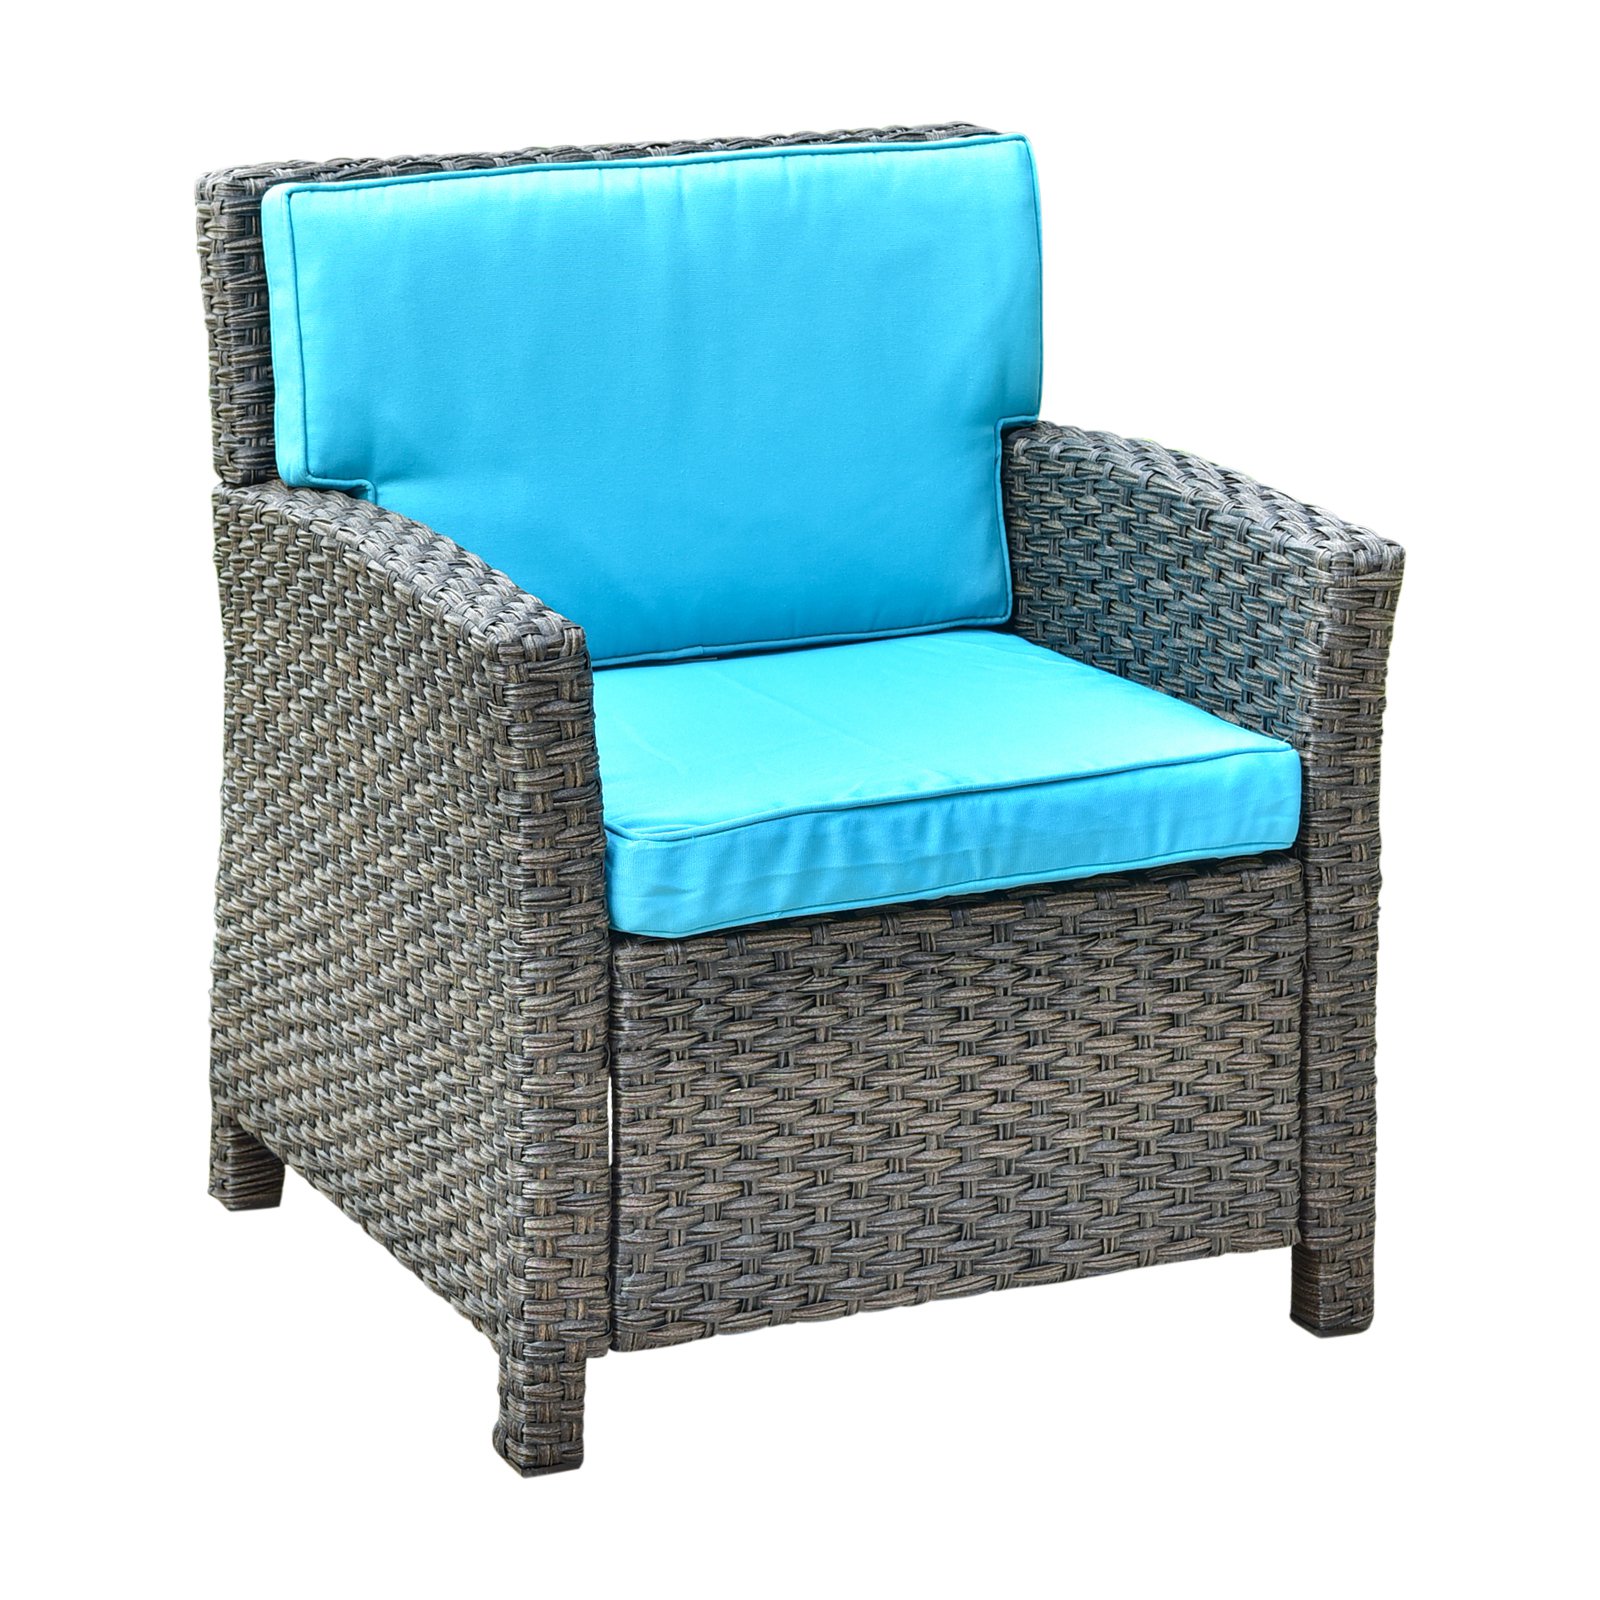 International Caravan Majorca Resin Wicker Patio Chair with Cushion - image 1 of 6